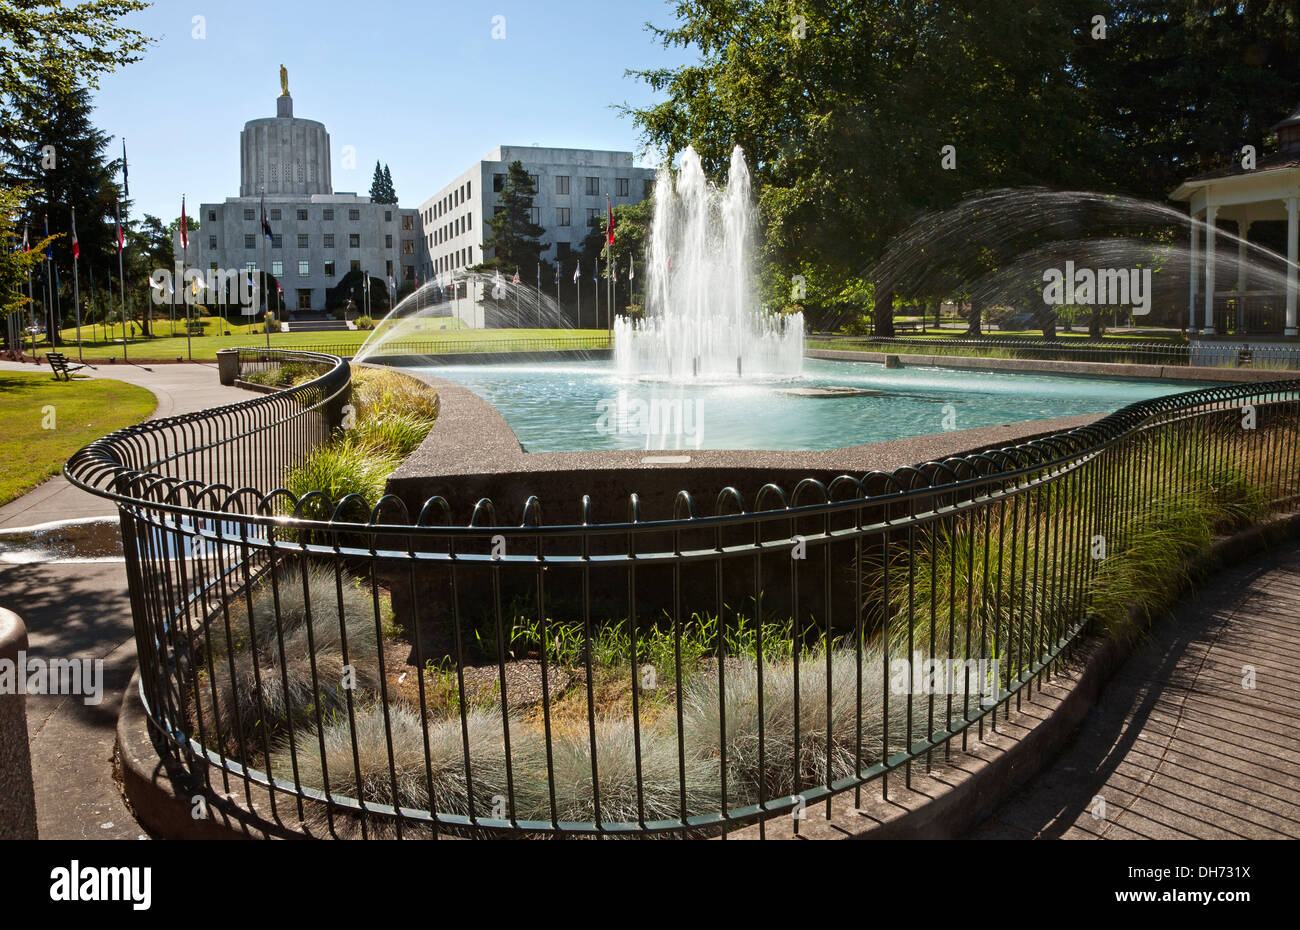 OR01442-00..OREGON - Waite Fountain in Willson Park near the Legislative Building at Oregon's state capitol in Salem. Stock Photo